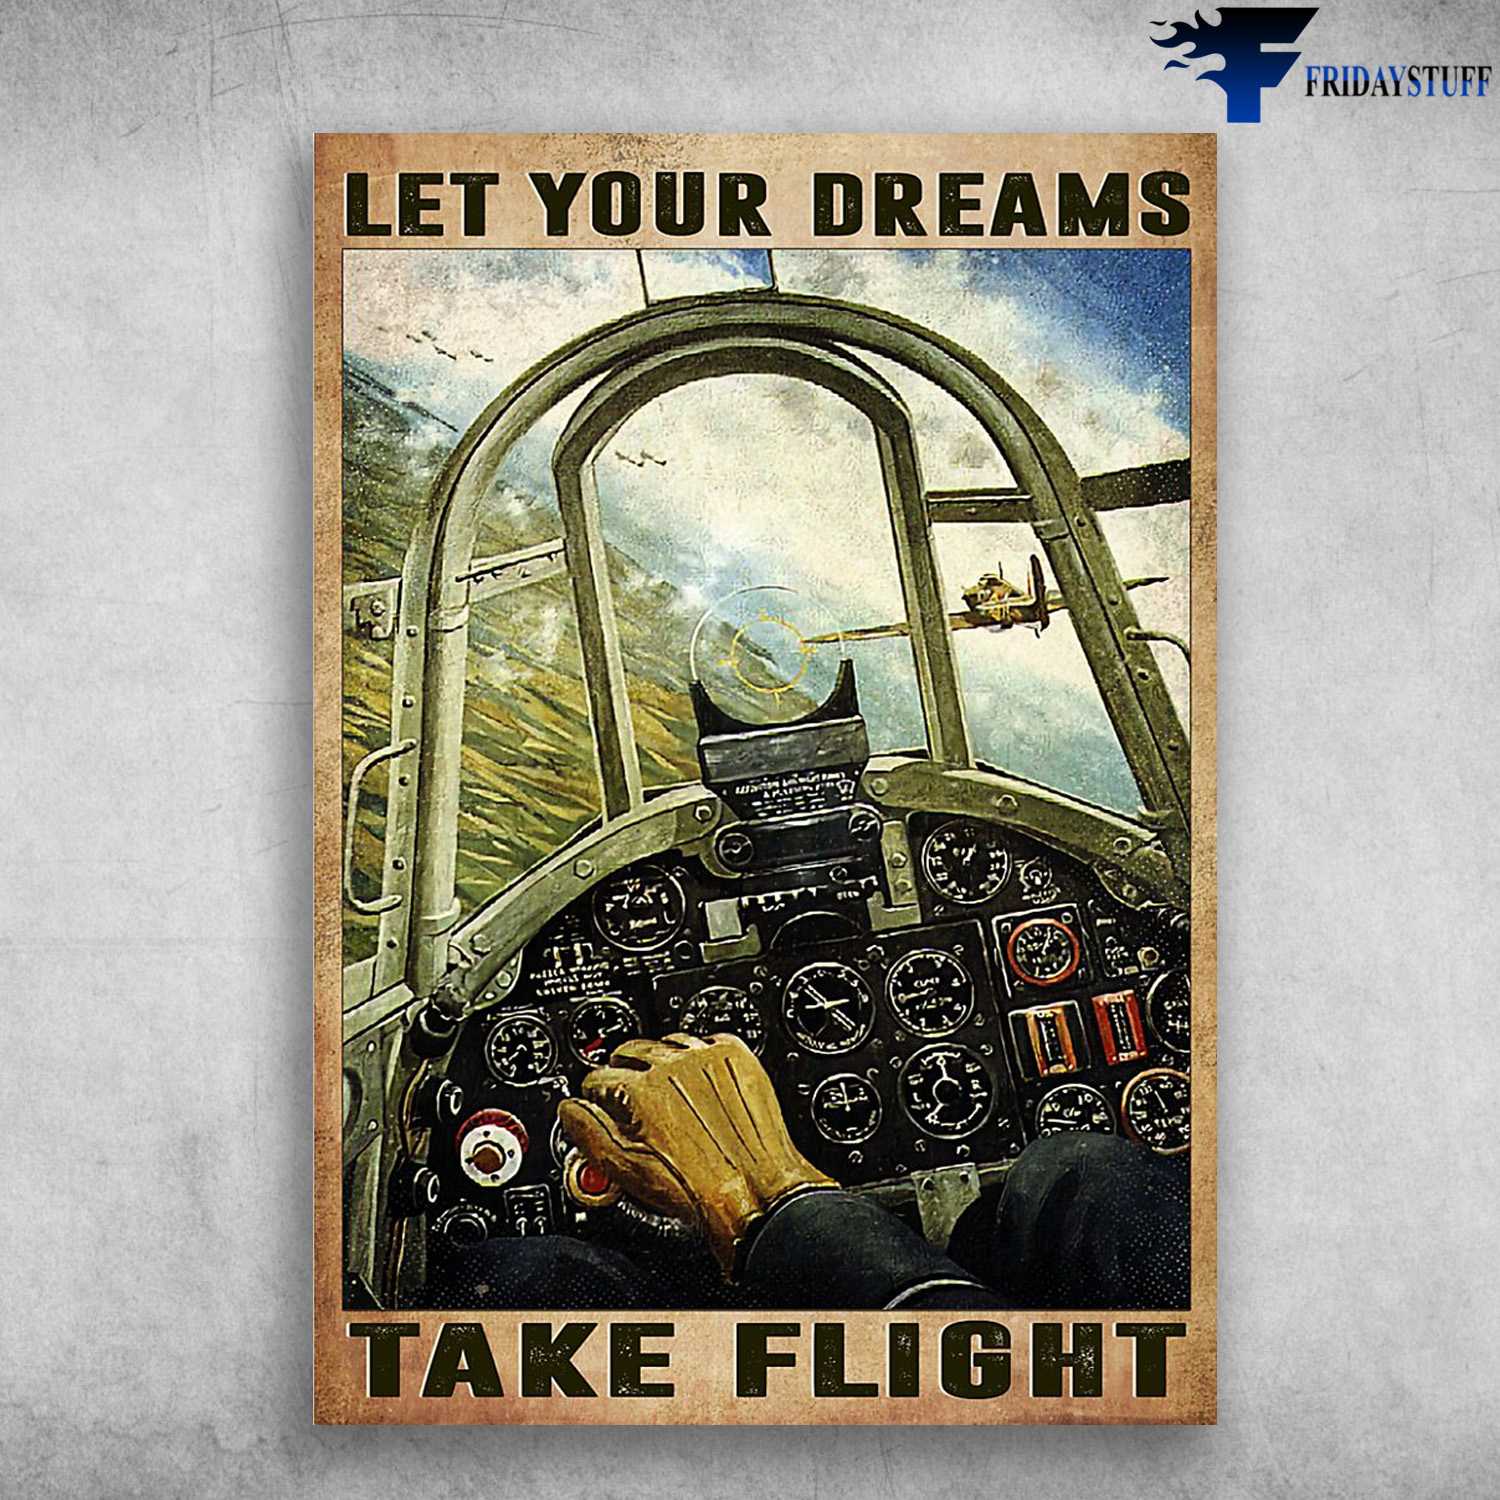 Pilot Poster, Gift For Pilot, Let Your Dreams, Take Flight